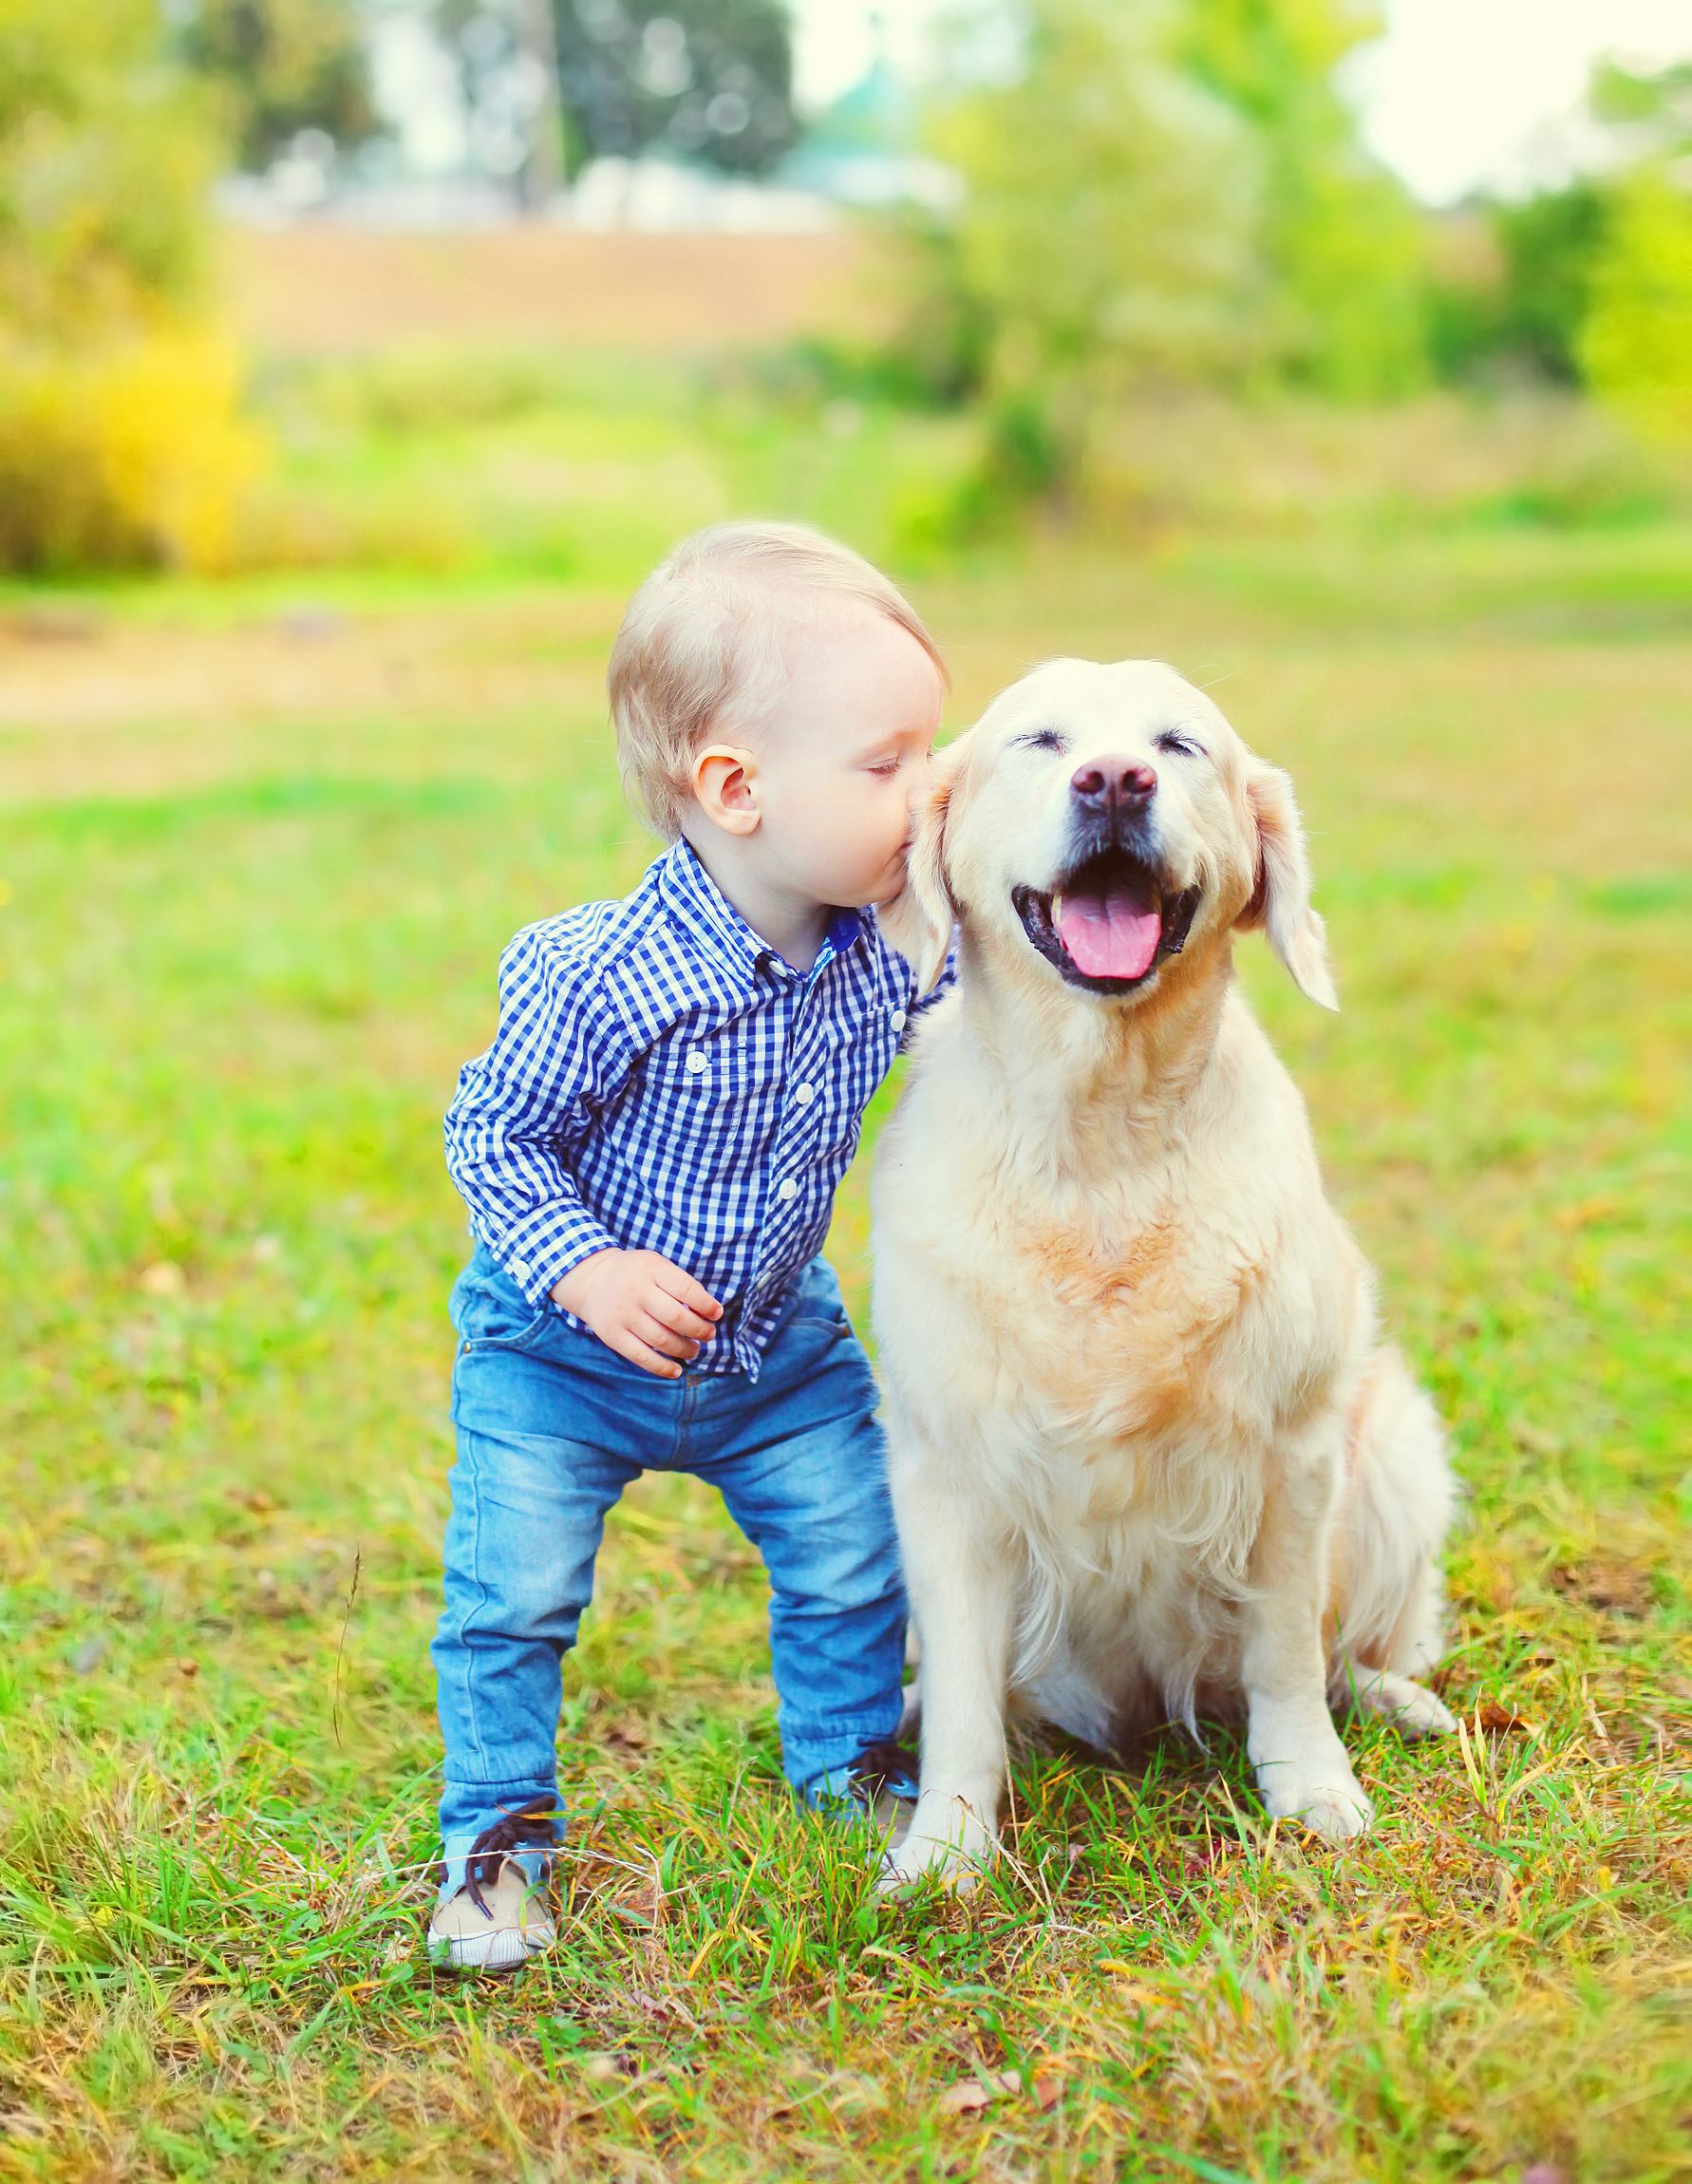 Camelot Beach Suites Little boy kissing Golden Retriever dog on grass in park